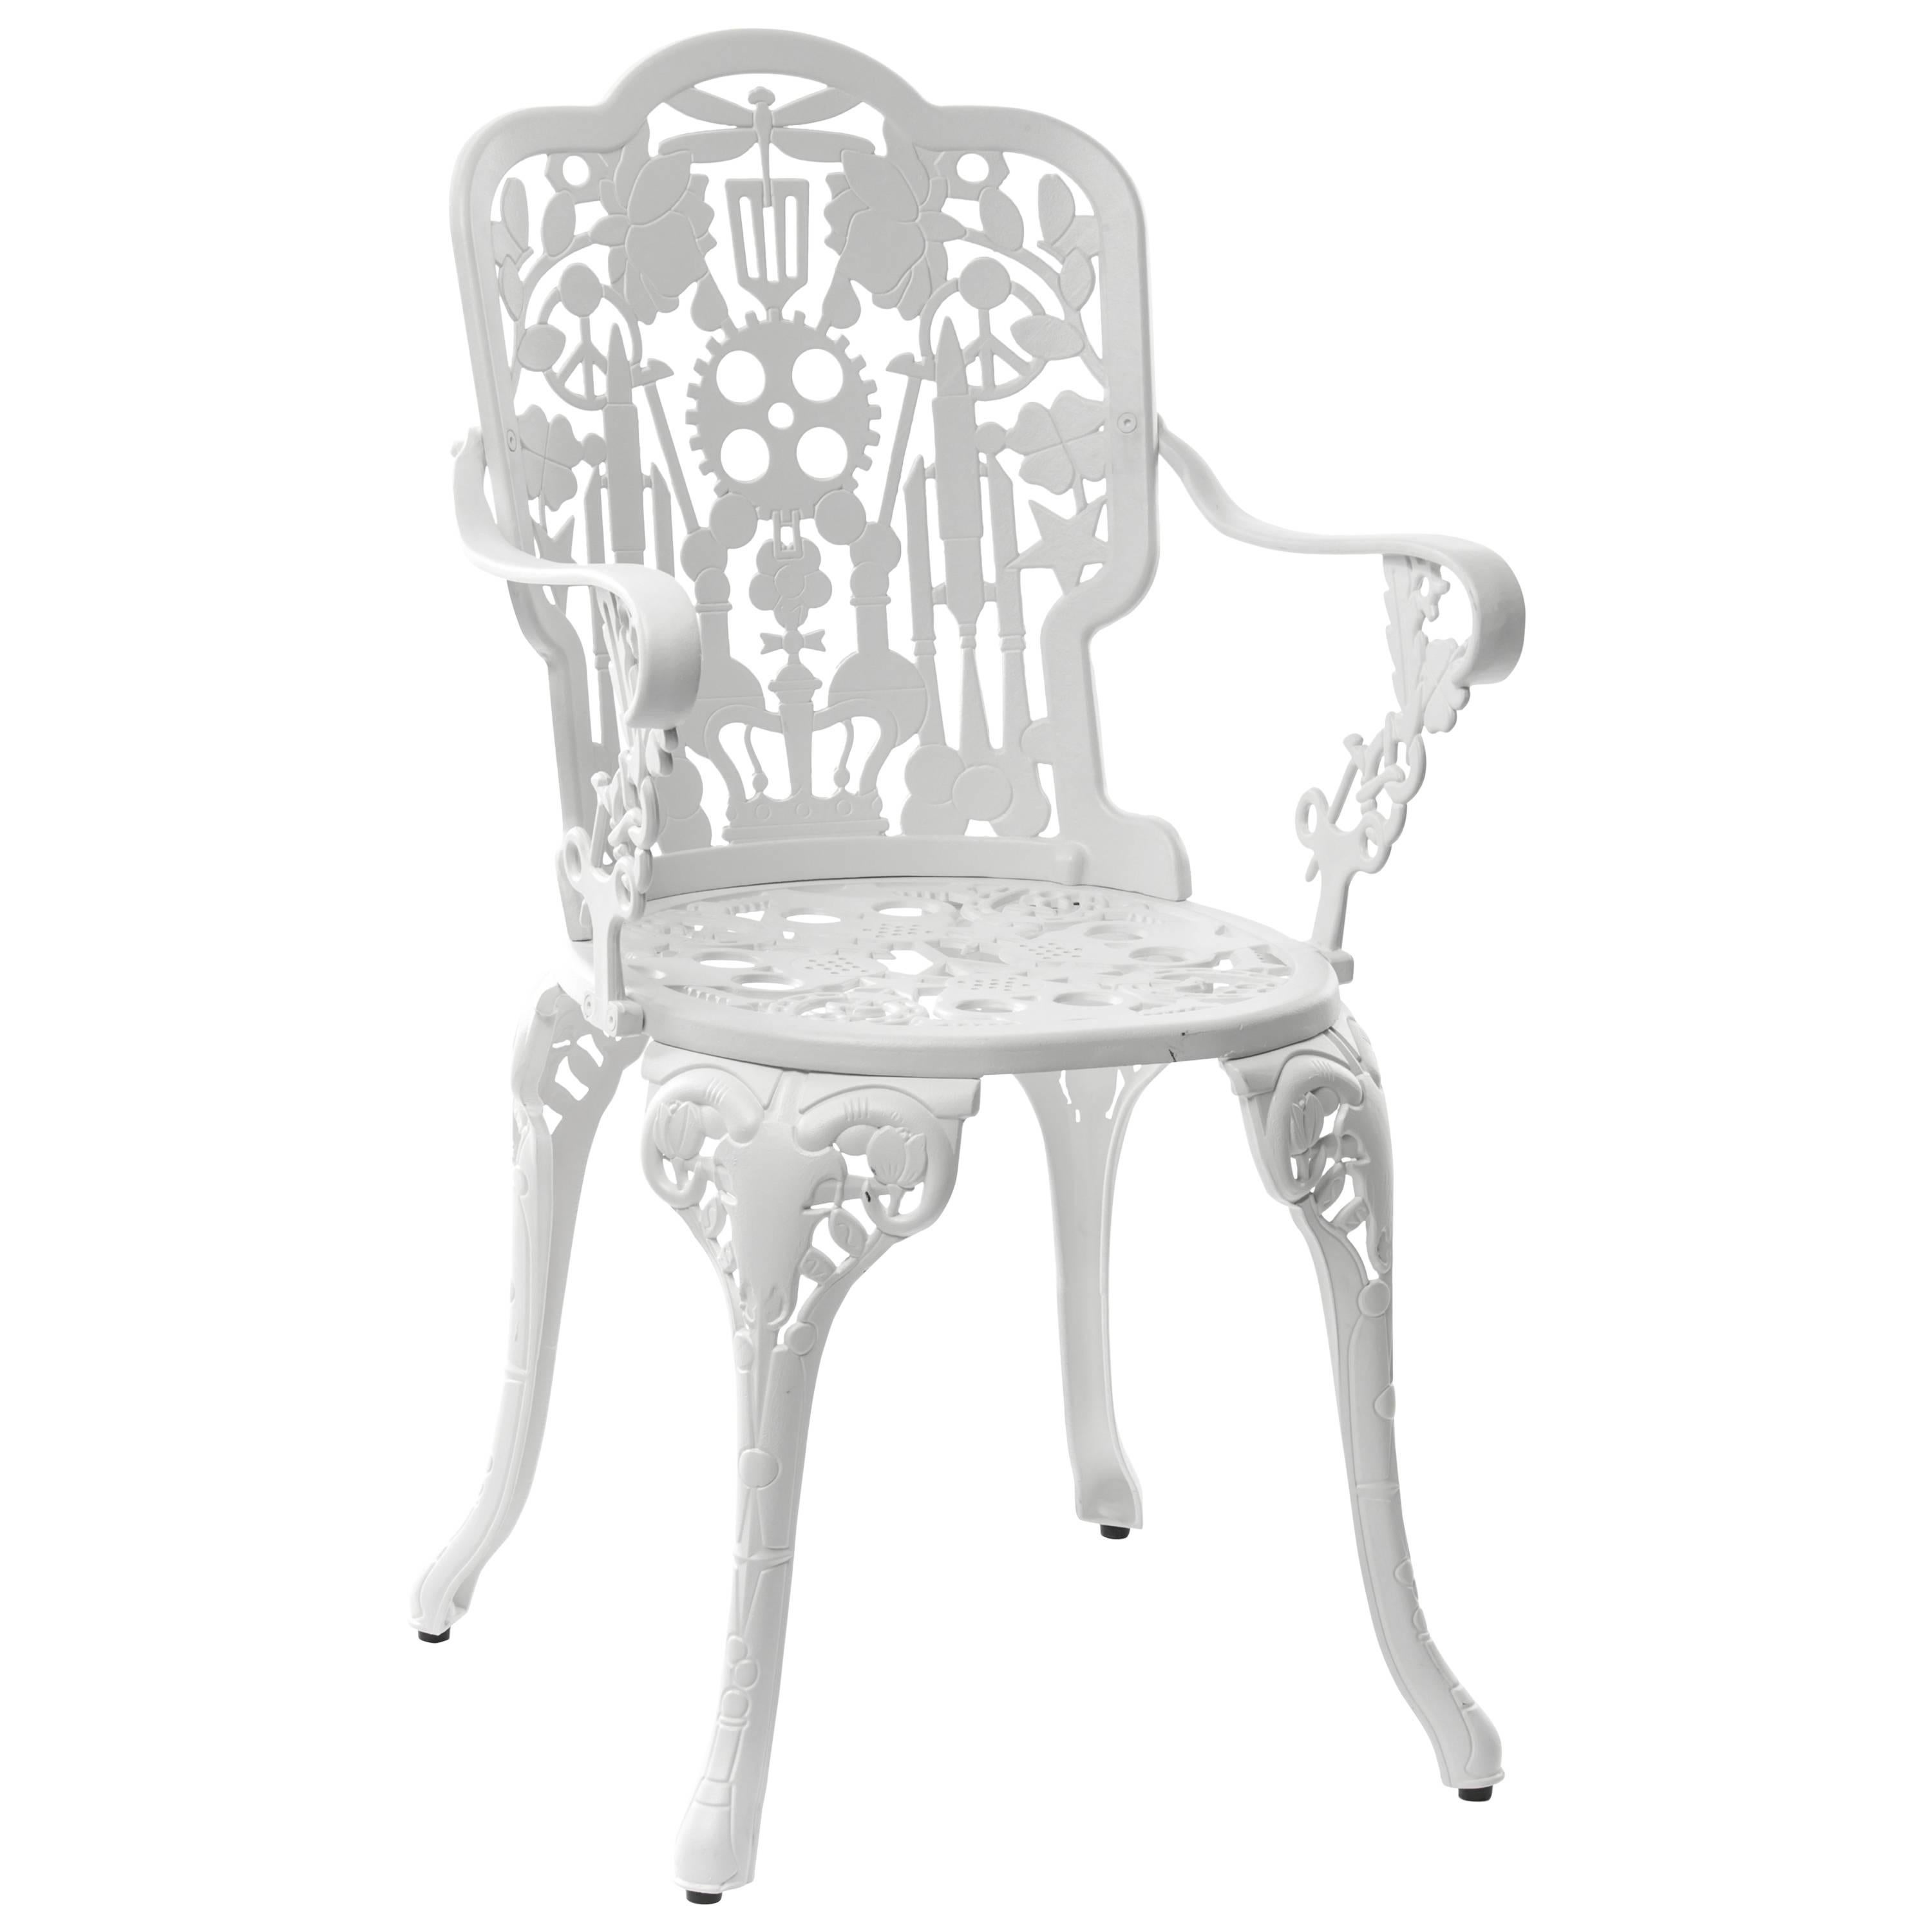 Aluminum Armchair "Industry Garden Furniture" by Seletti, White